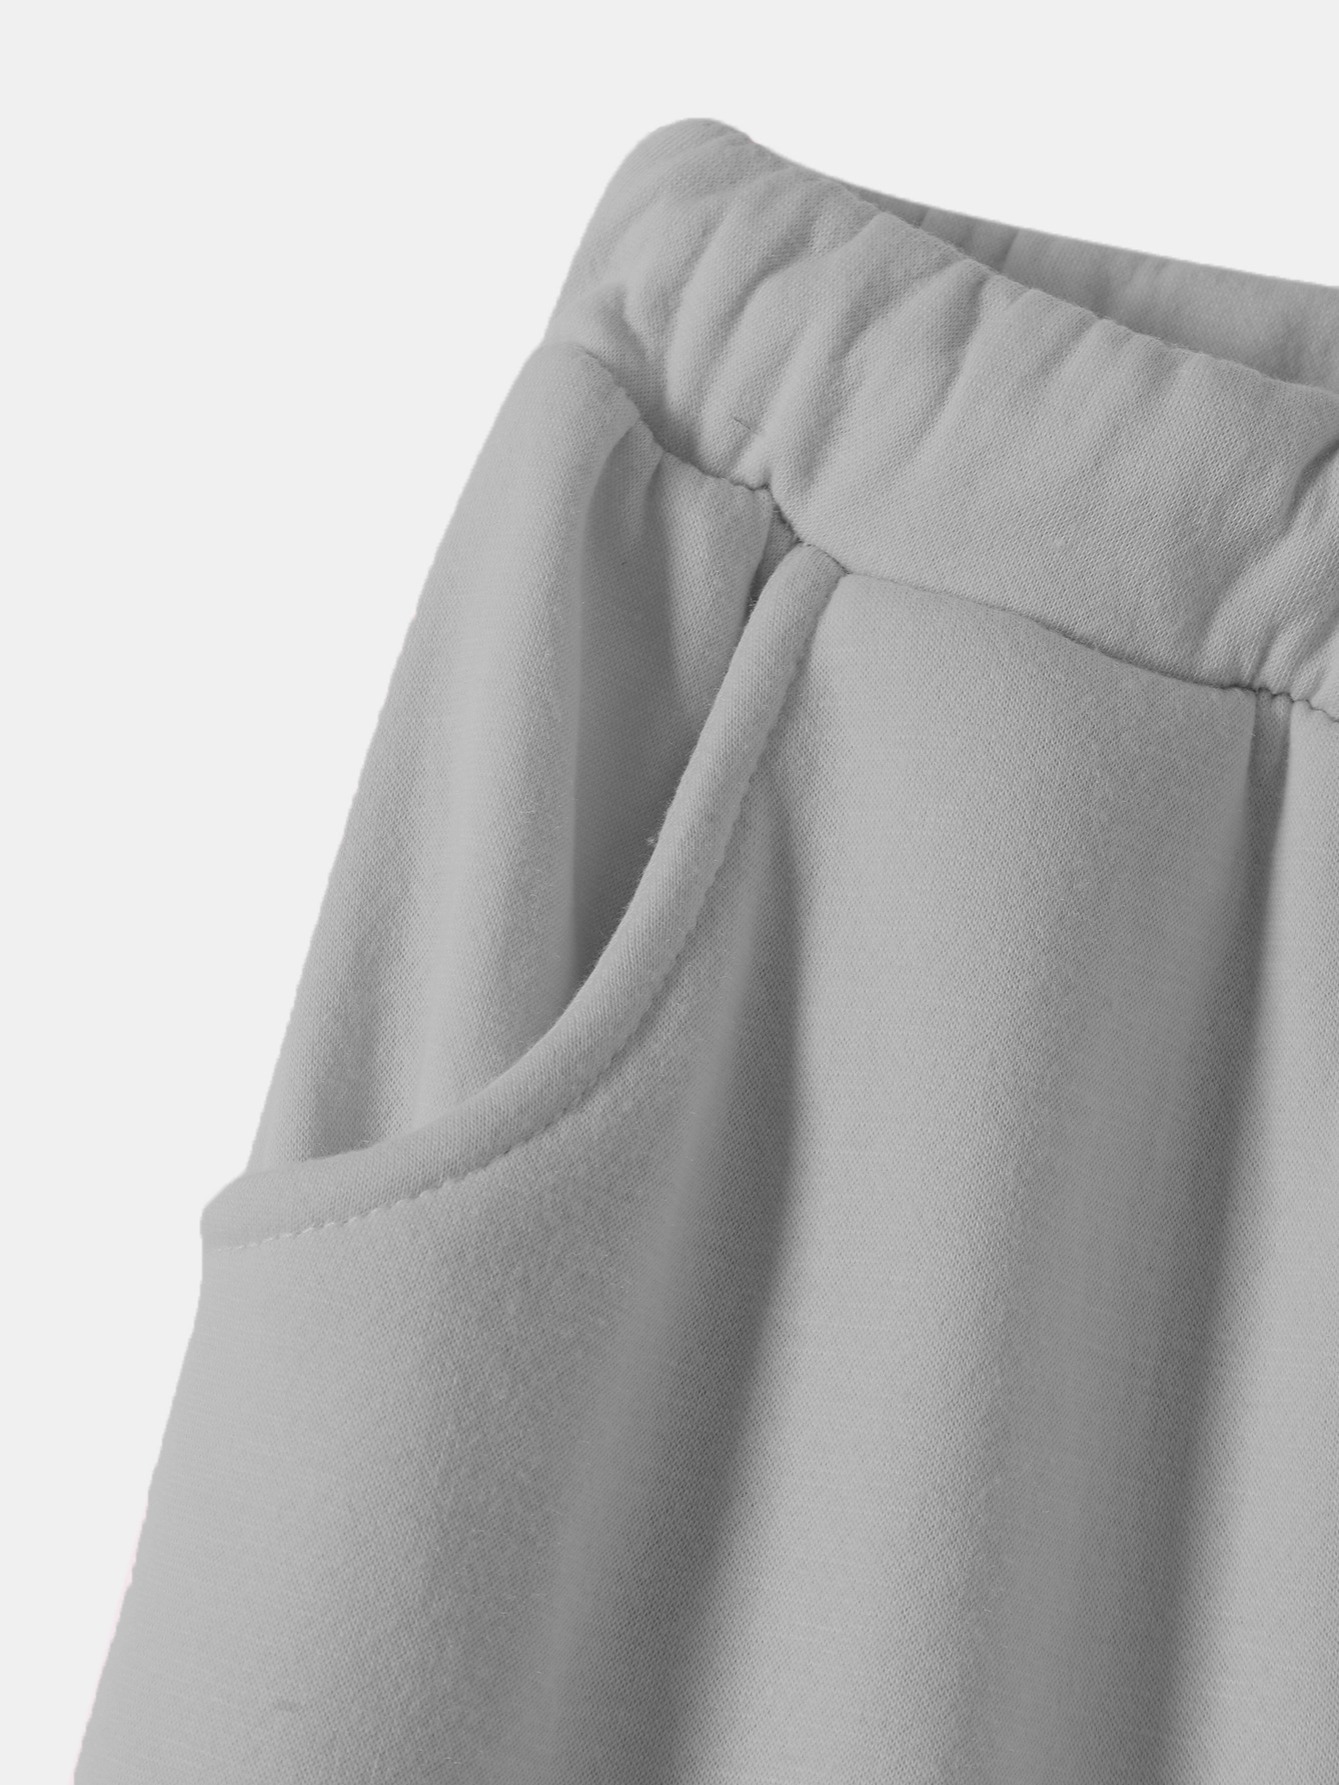 solid drawstring thermal sweatpants versatile loose comfy jogger pants womens clothing details 2